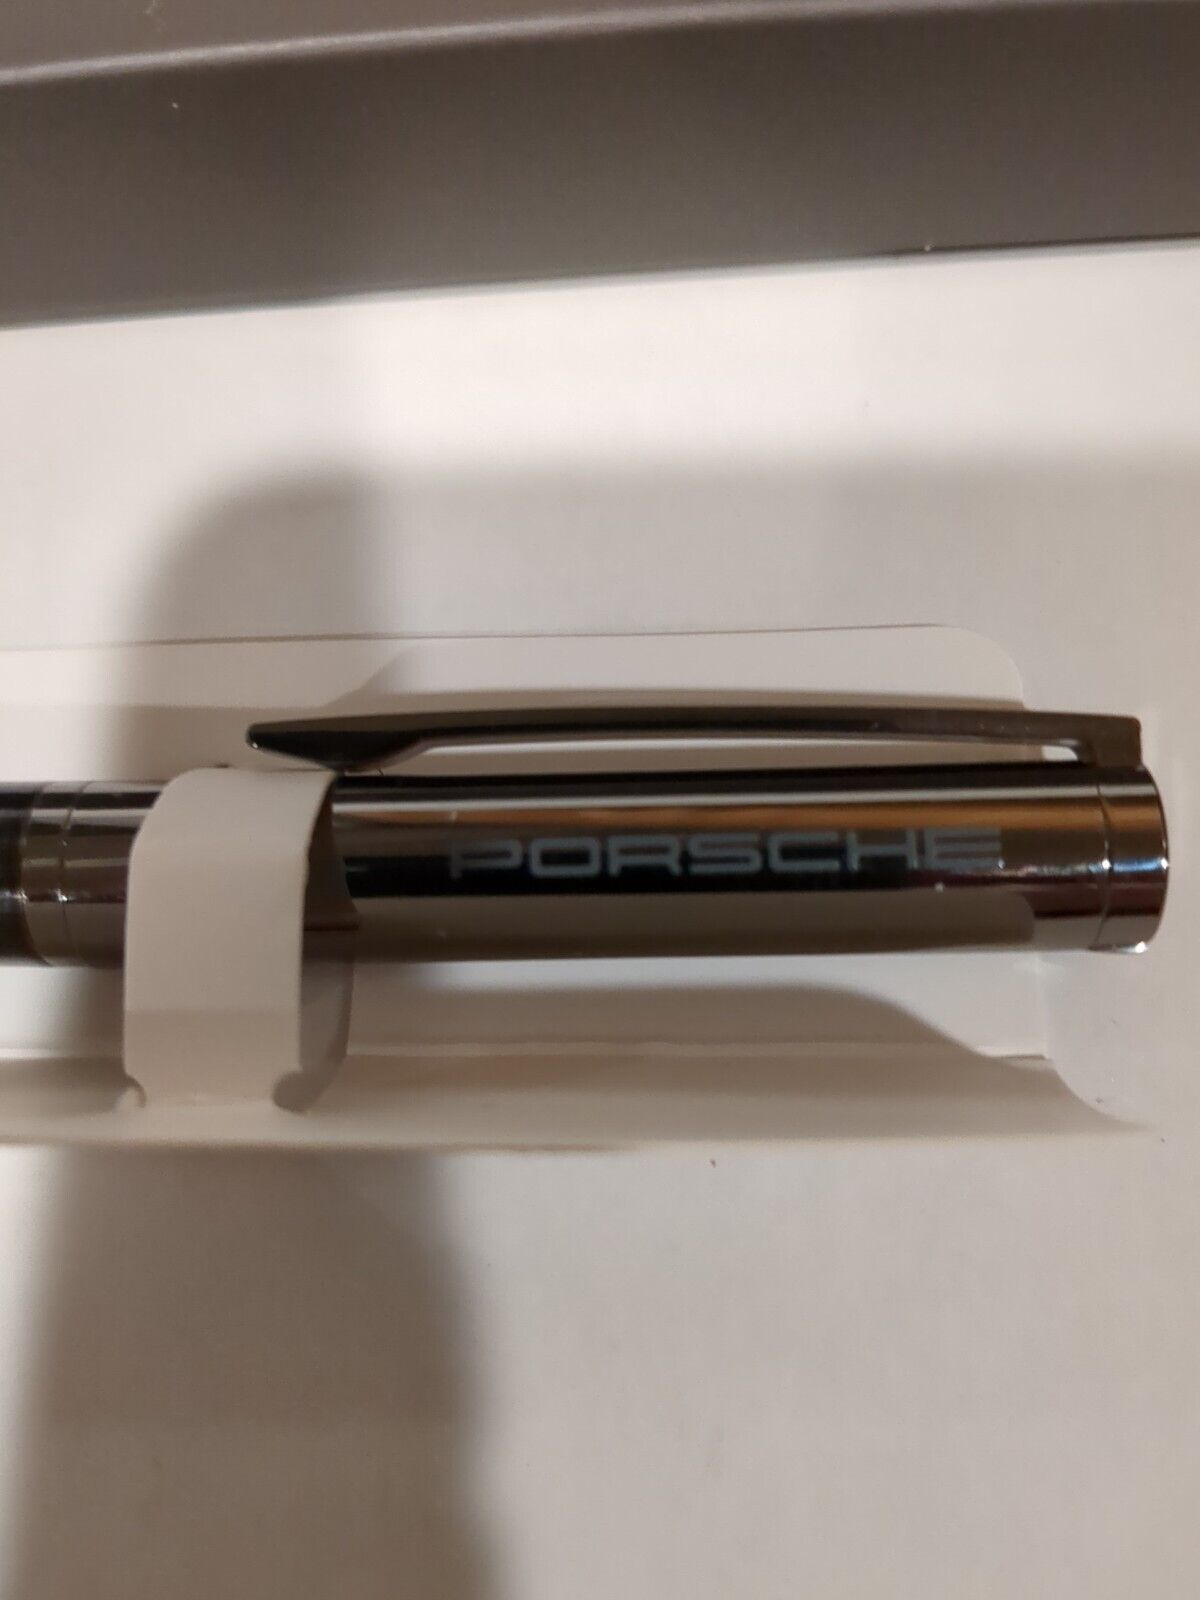 AWESOME Porsche Official Ballpoint Macan Ink Pen Carbon Fiber